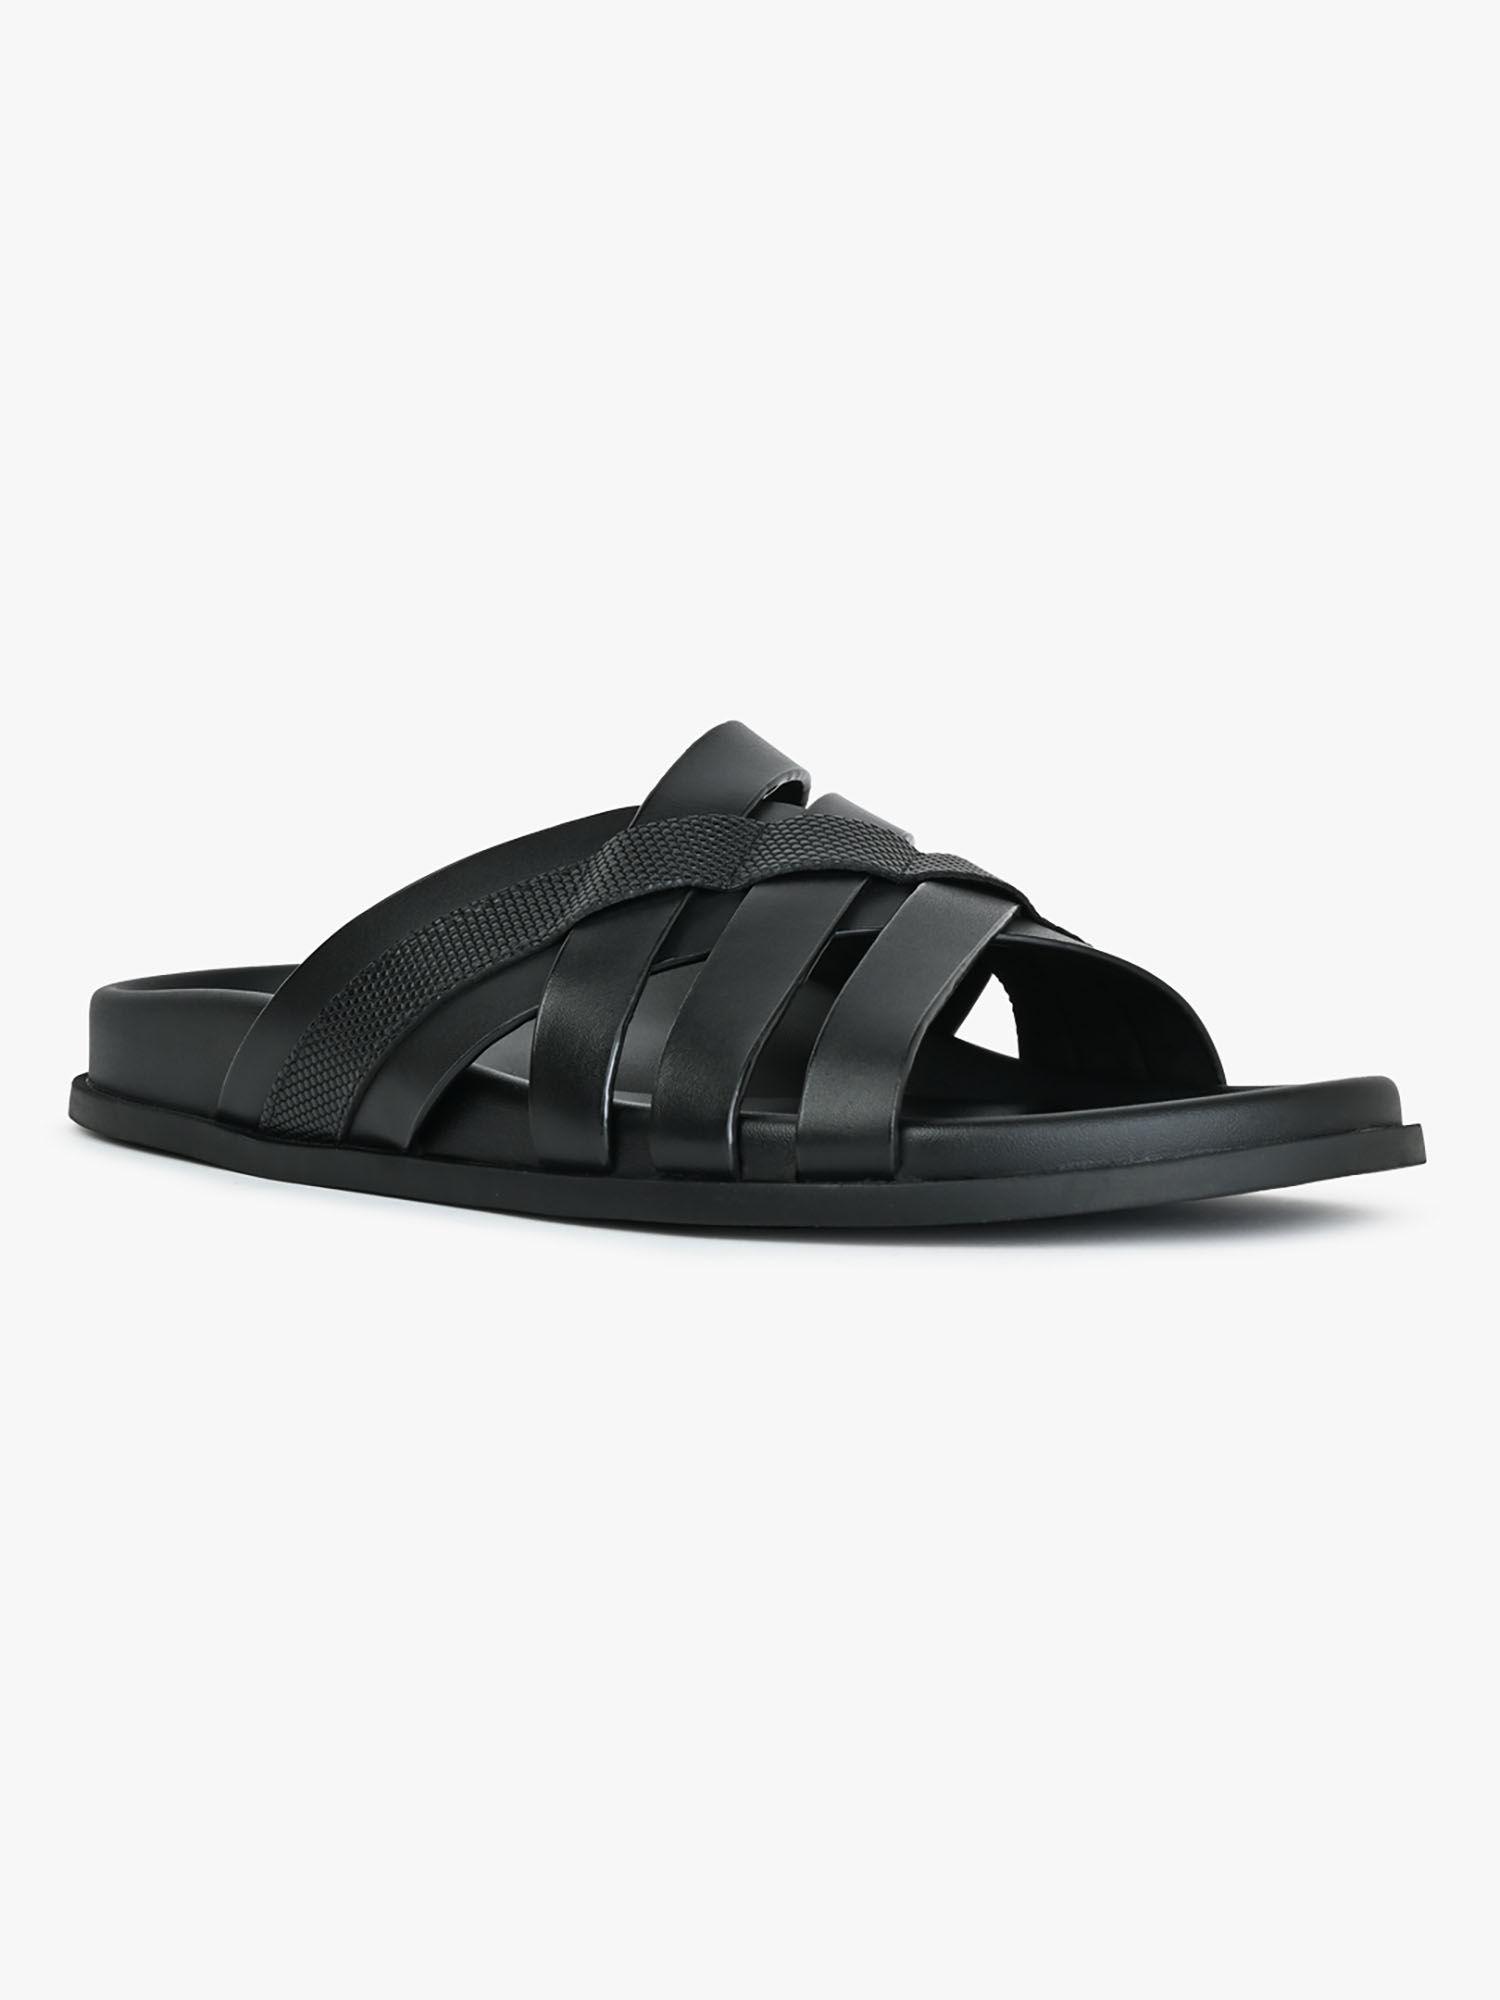 black-leather-sandals